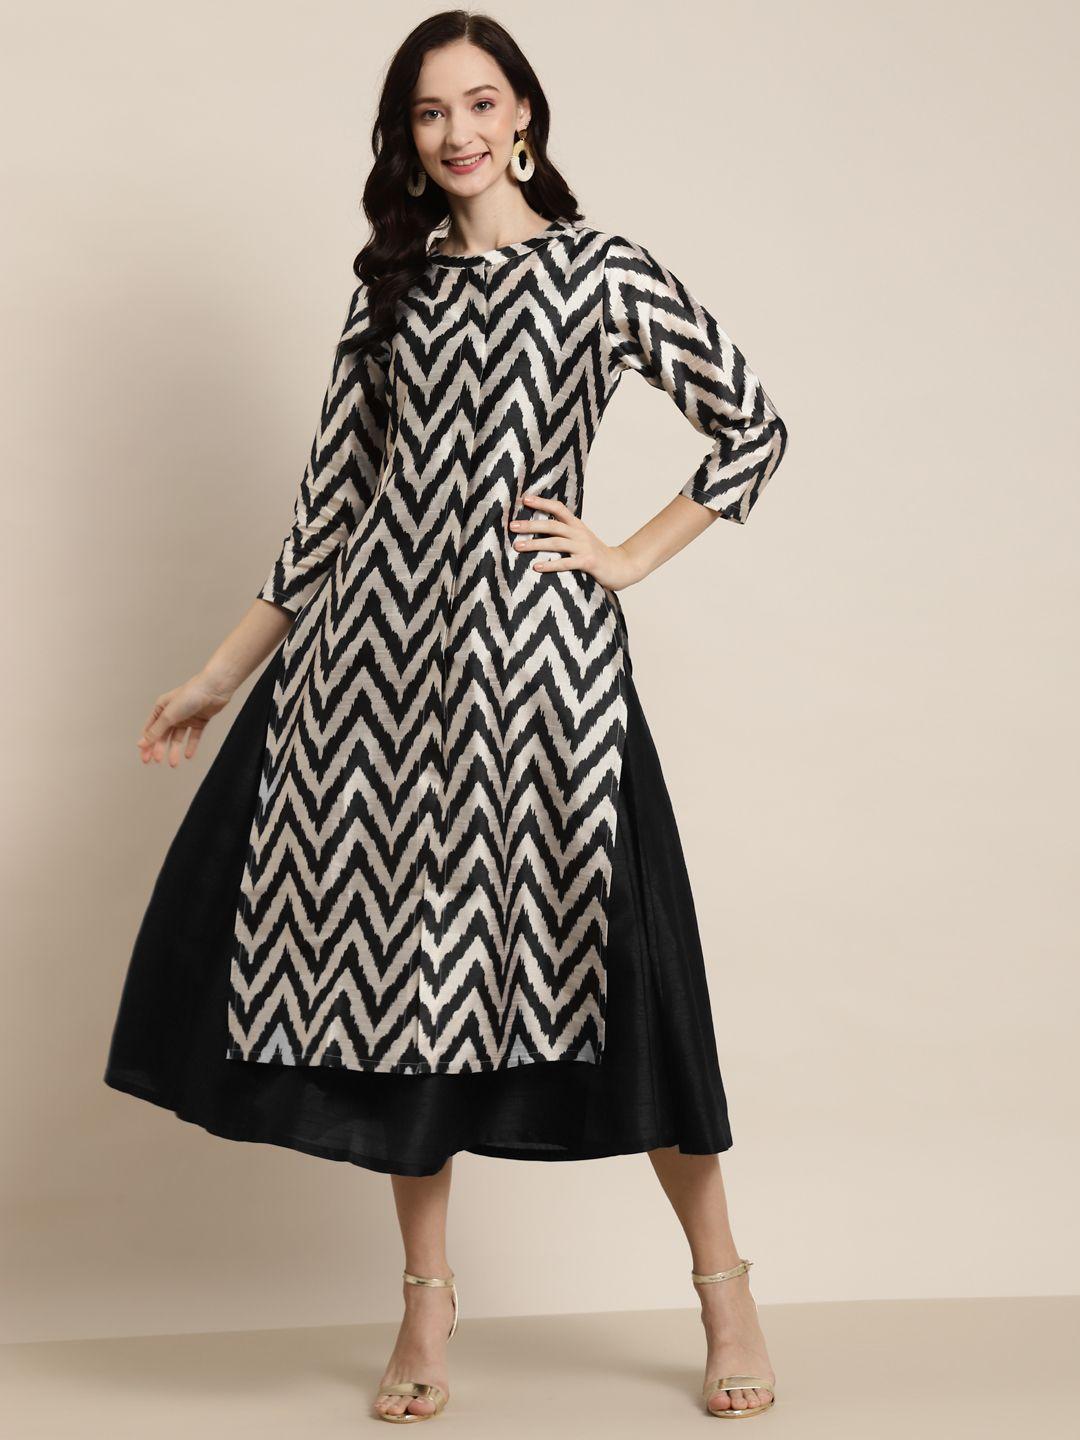 shae by sassafras black & white layered ikat printed maxi dress